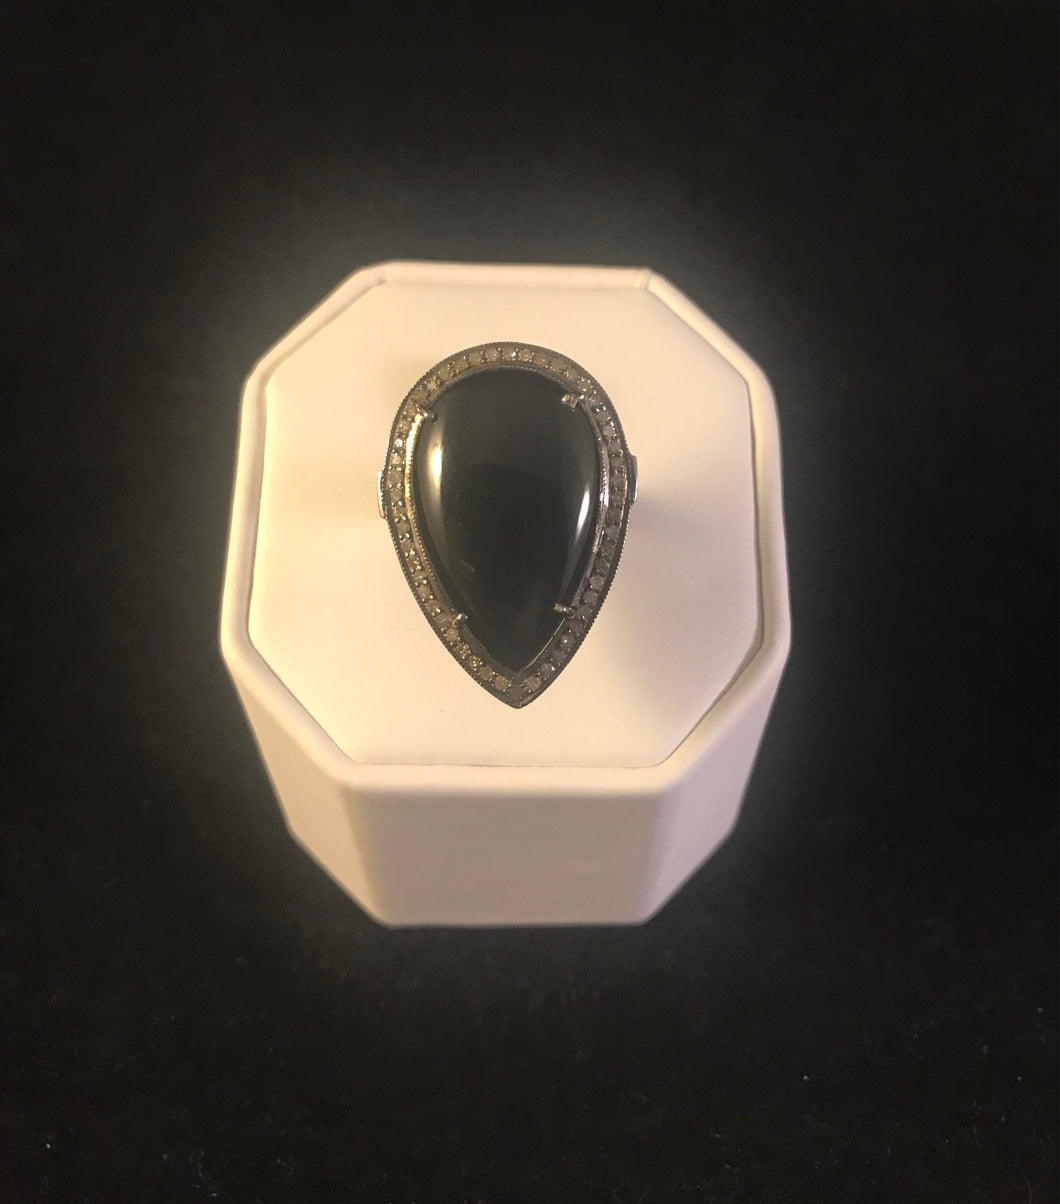 Black onyx and diamond statement ring